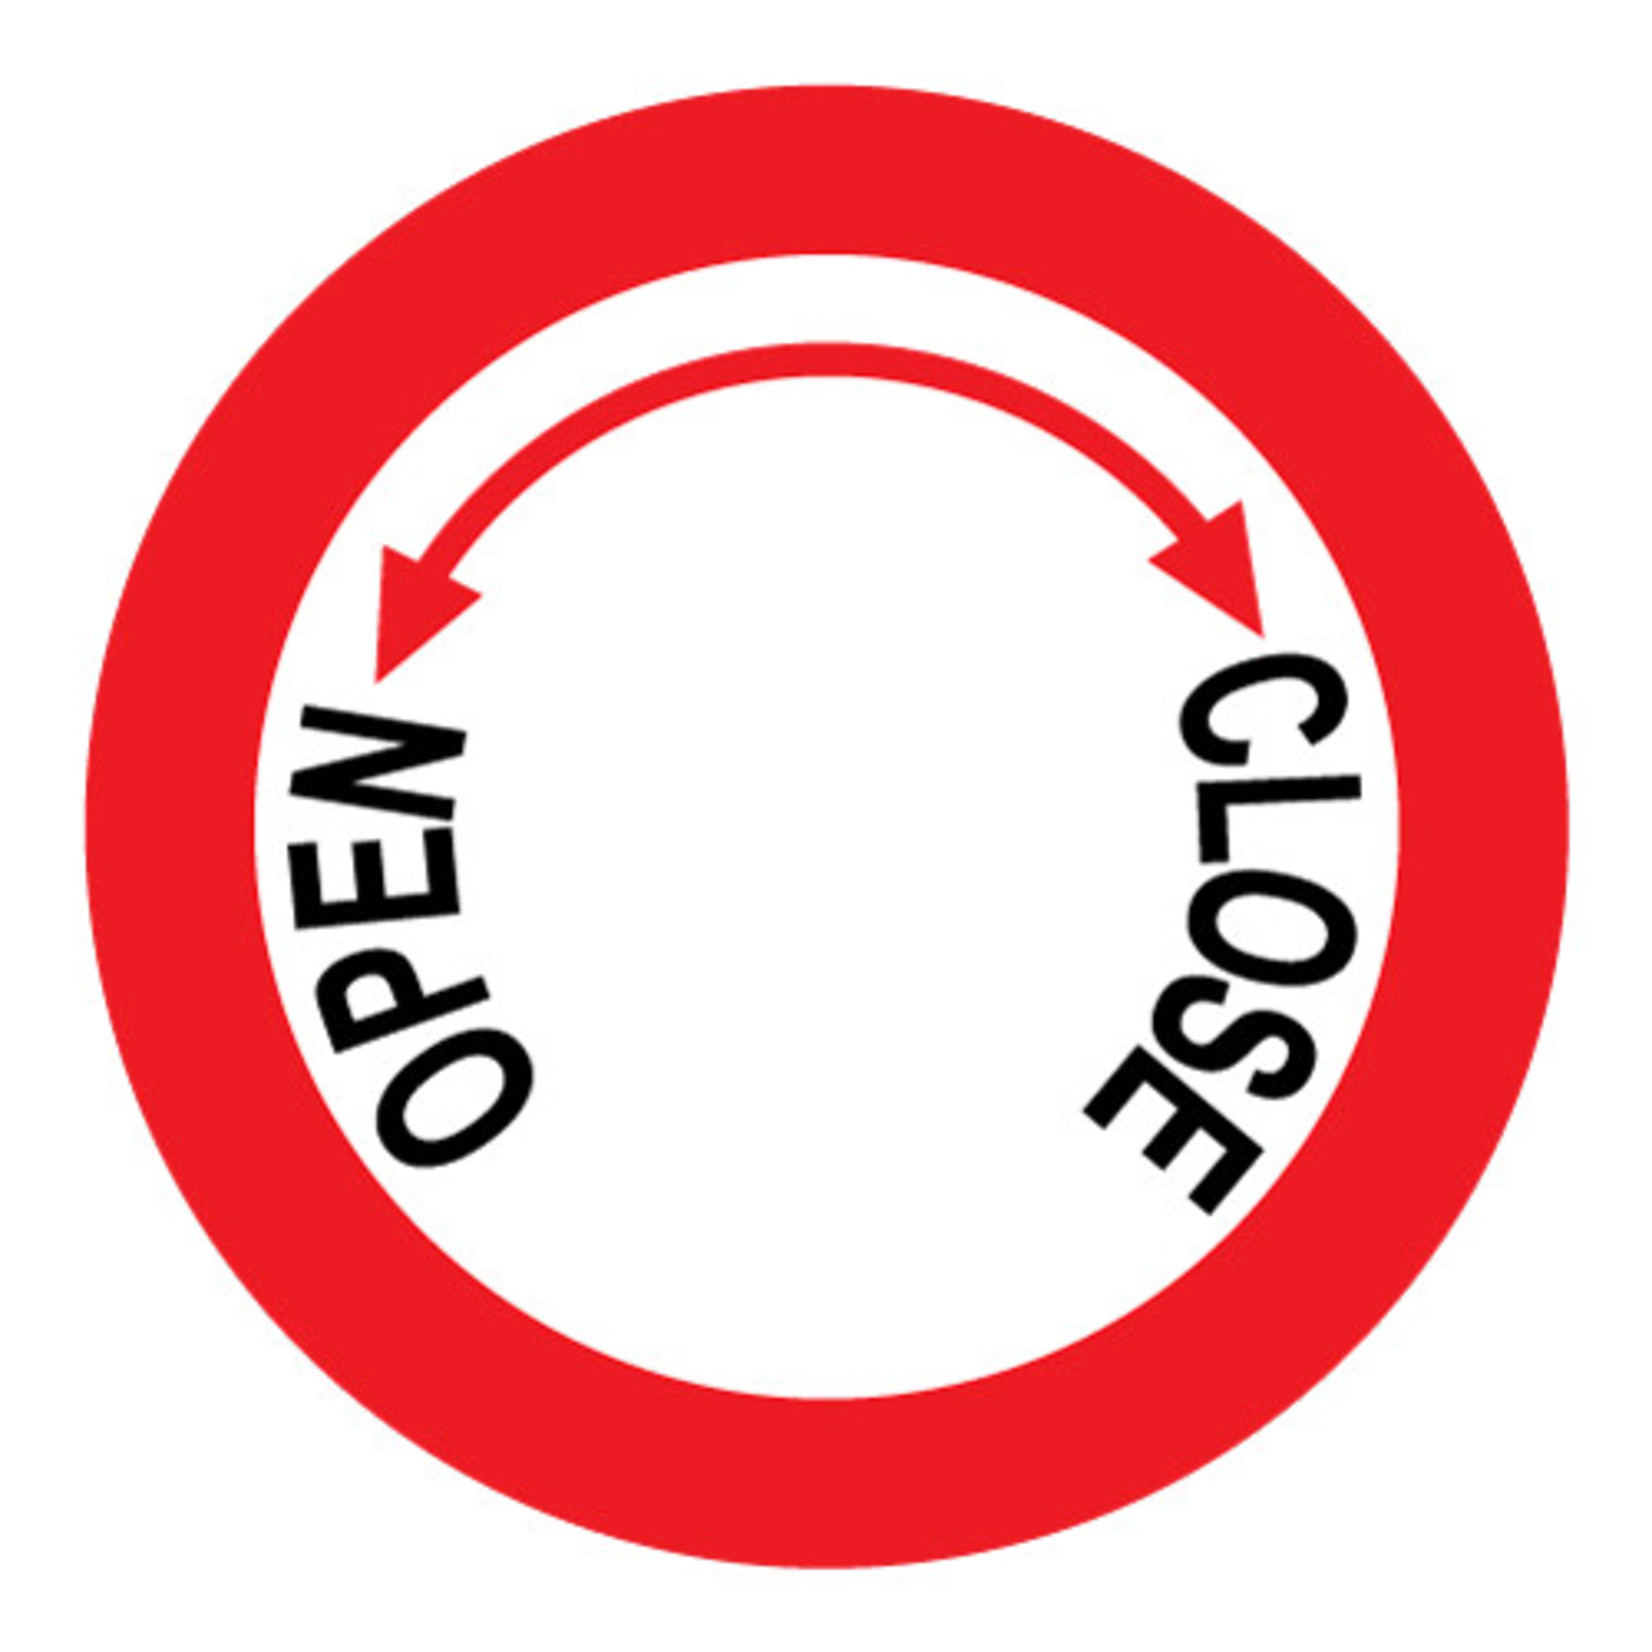 pictogram "Afsluiter open / close" sticker